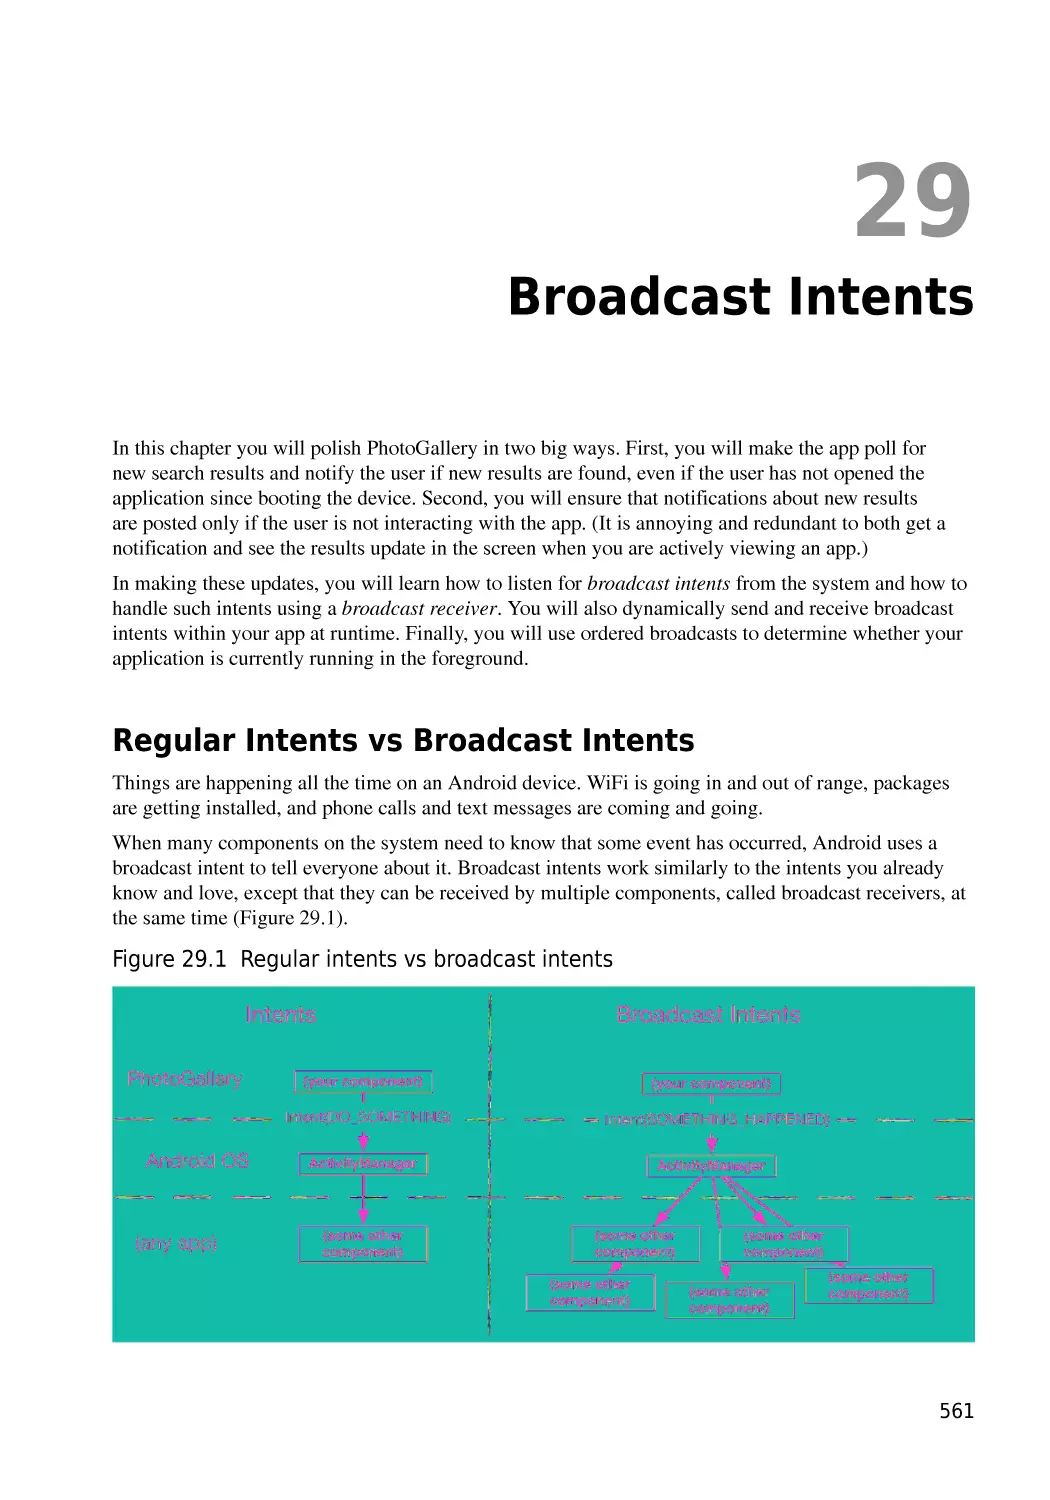 Chapter 29  Broadcast Intents
Regular Intents vs Broadcast Intents